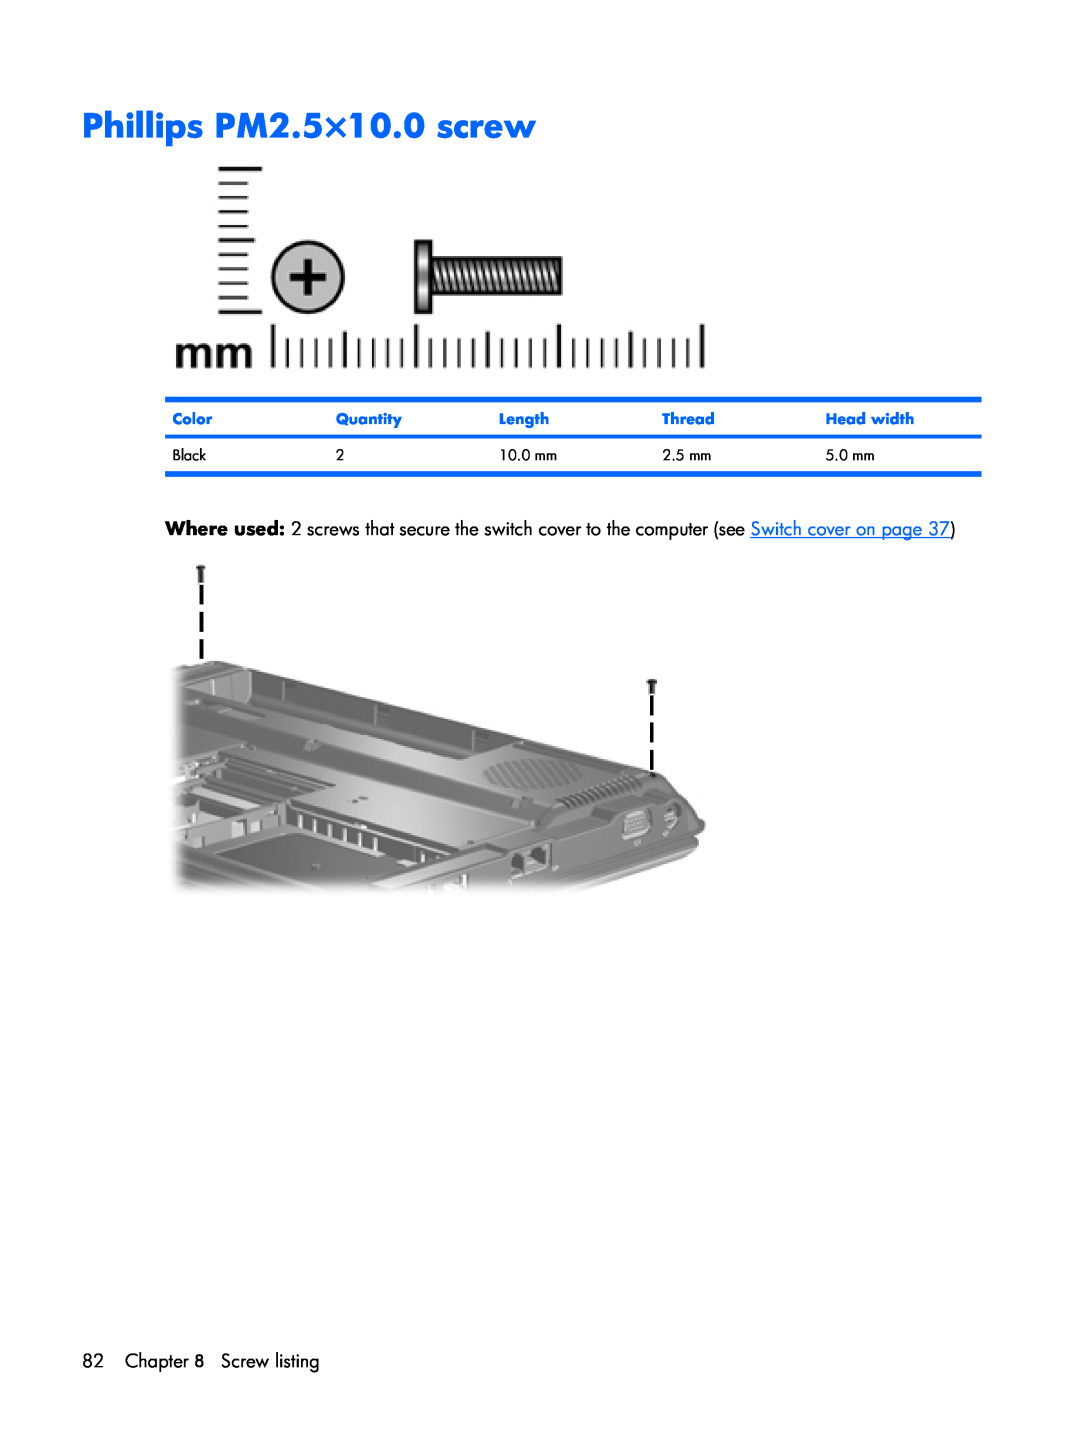 Compaq F500 manual Phillips PM2.5×10.0 screw, Color, Quantity, Length, Thread, Head width, Black, 10.0 mm, 2.5 mm, 5.0 mm 